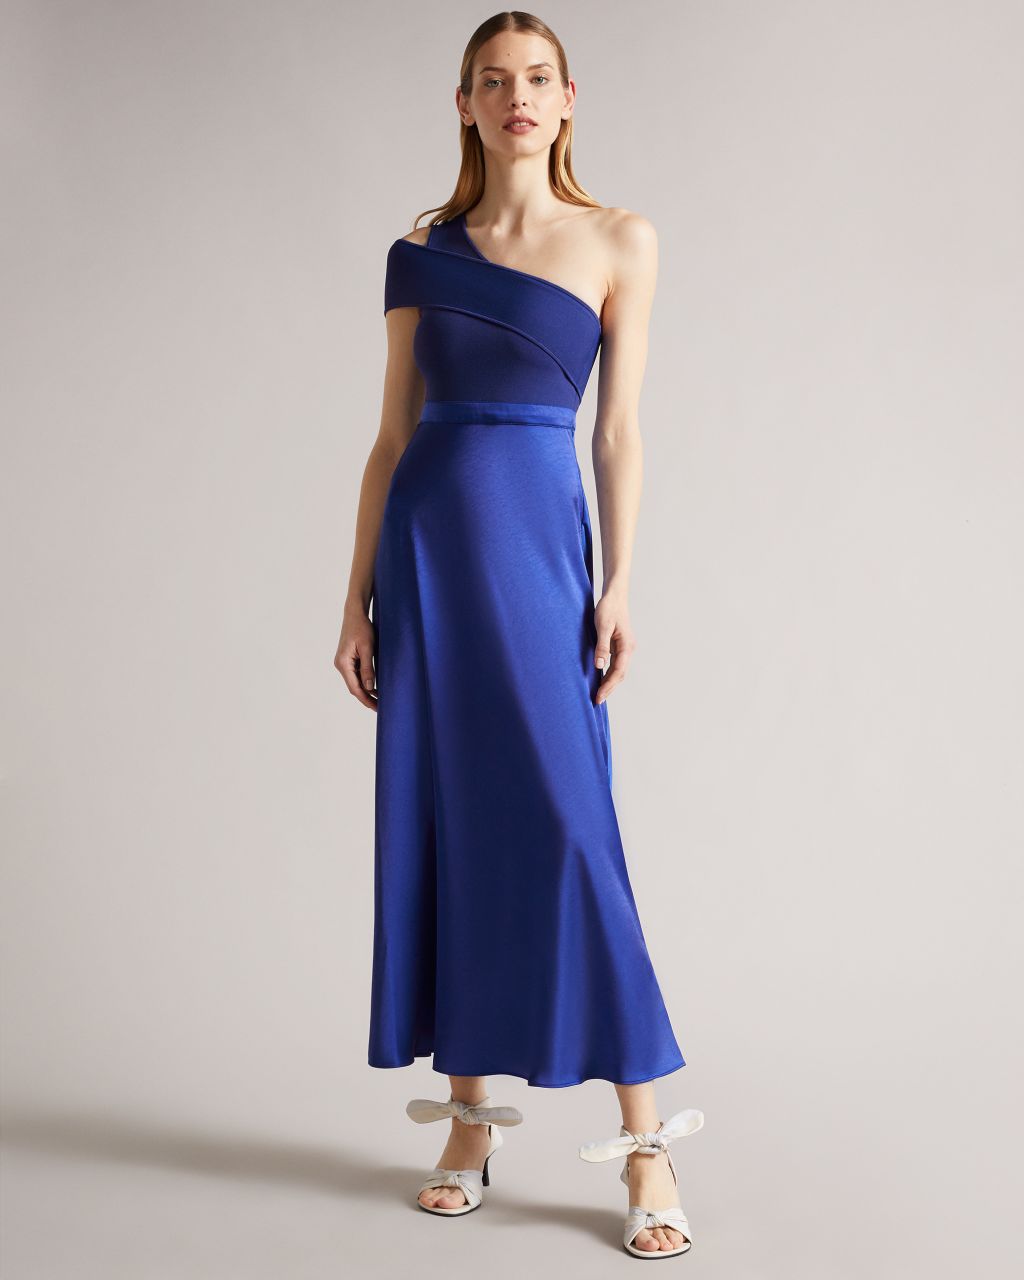 Ted Baker Women's Asymmetric Knit Bodice Dress With Satin Skirt in Dark Blue, Ivena